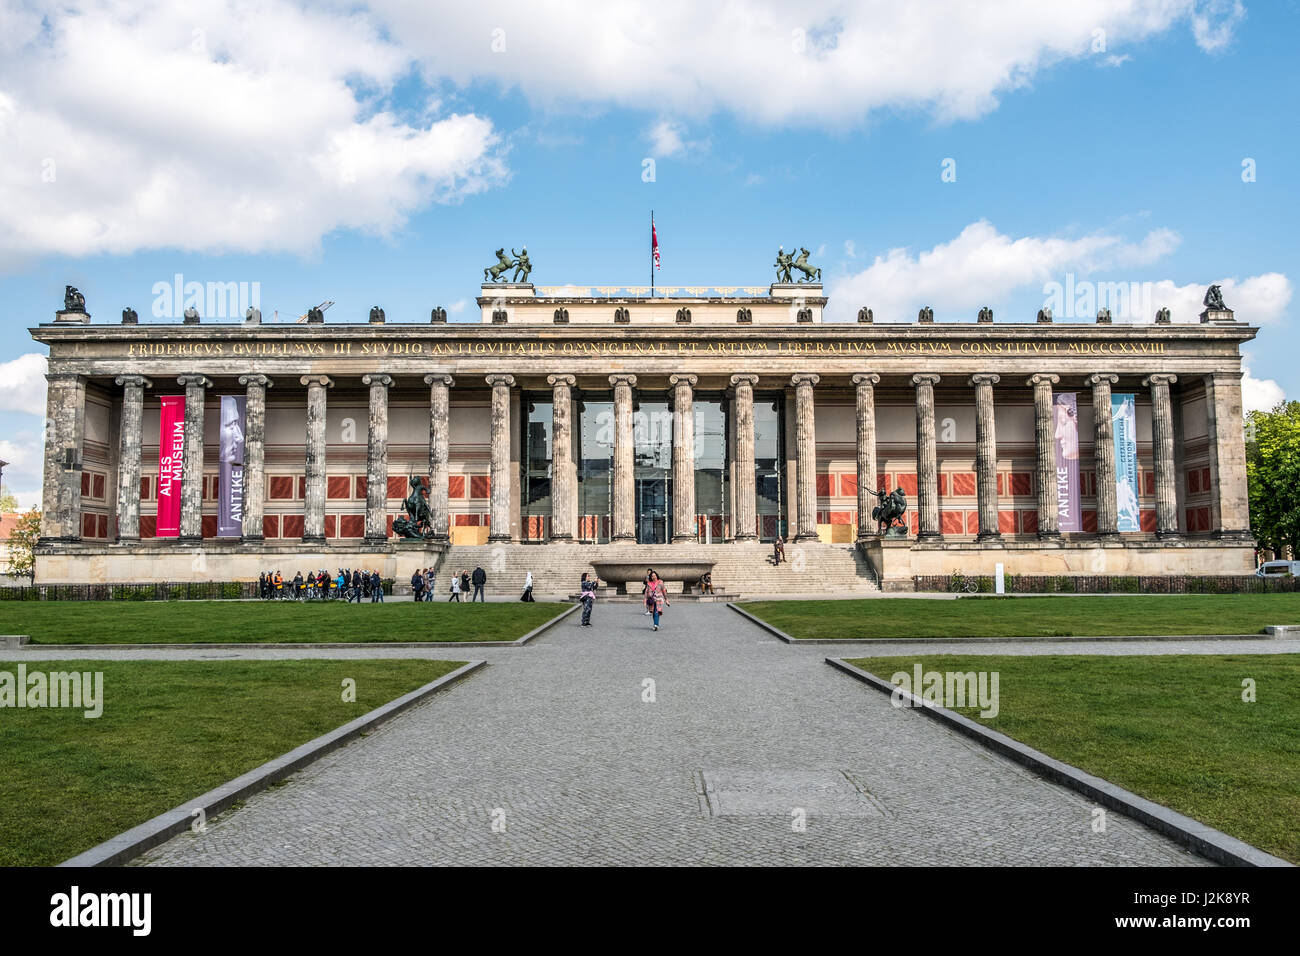 Berlin, Deutschland - 27 April: das alte Museum (Altes Museum) auf der Museumsinsel in Berlin, Deutschland. Stockfoto